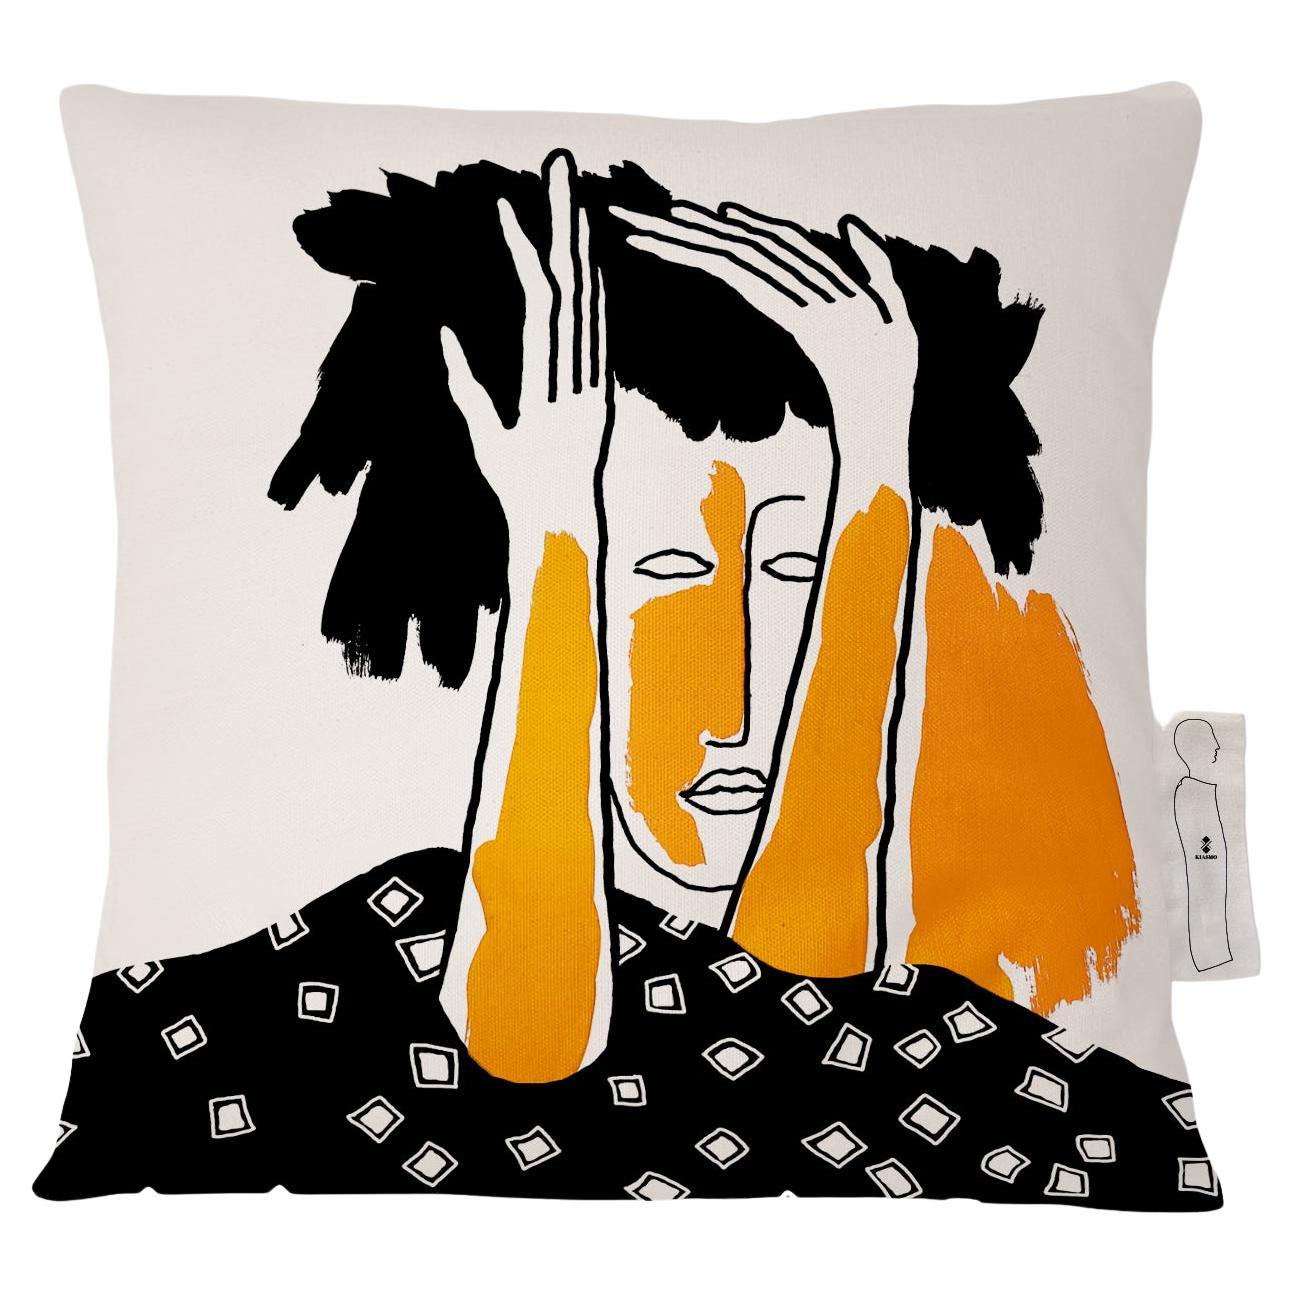 21st Century Pillows Kiasmo "Nostalghia VI" Designer Vincenzo D'alba